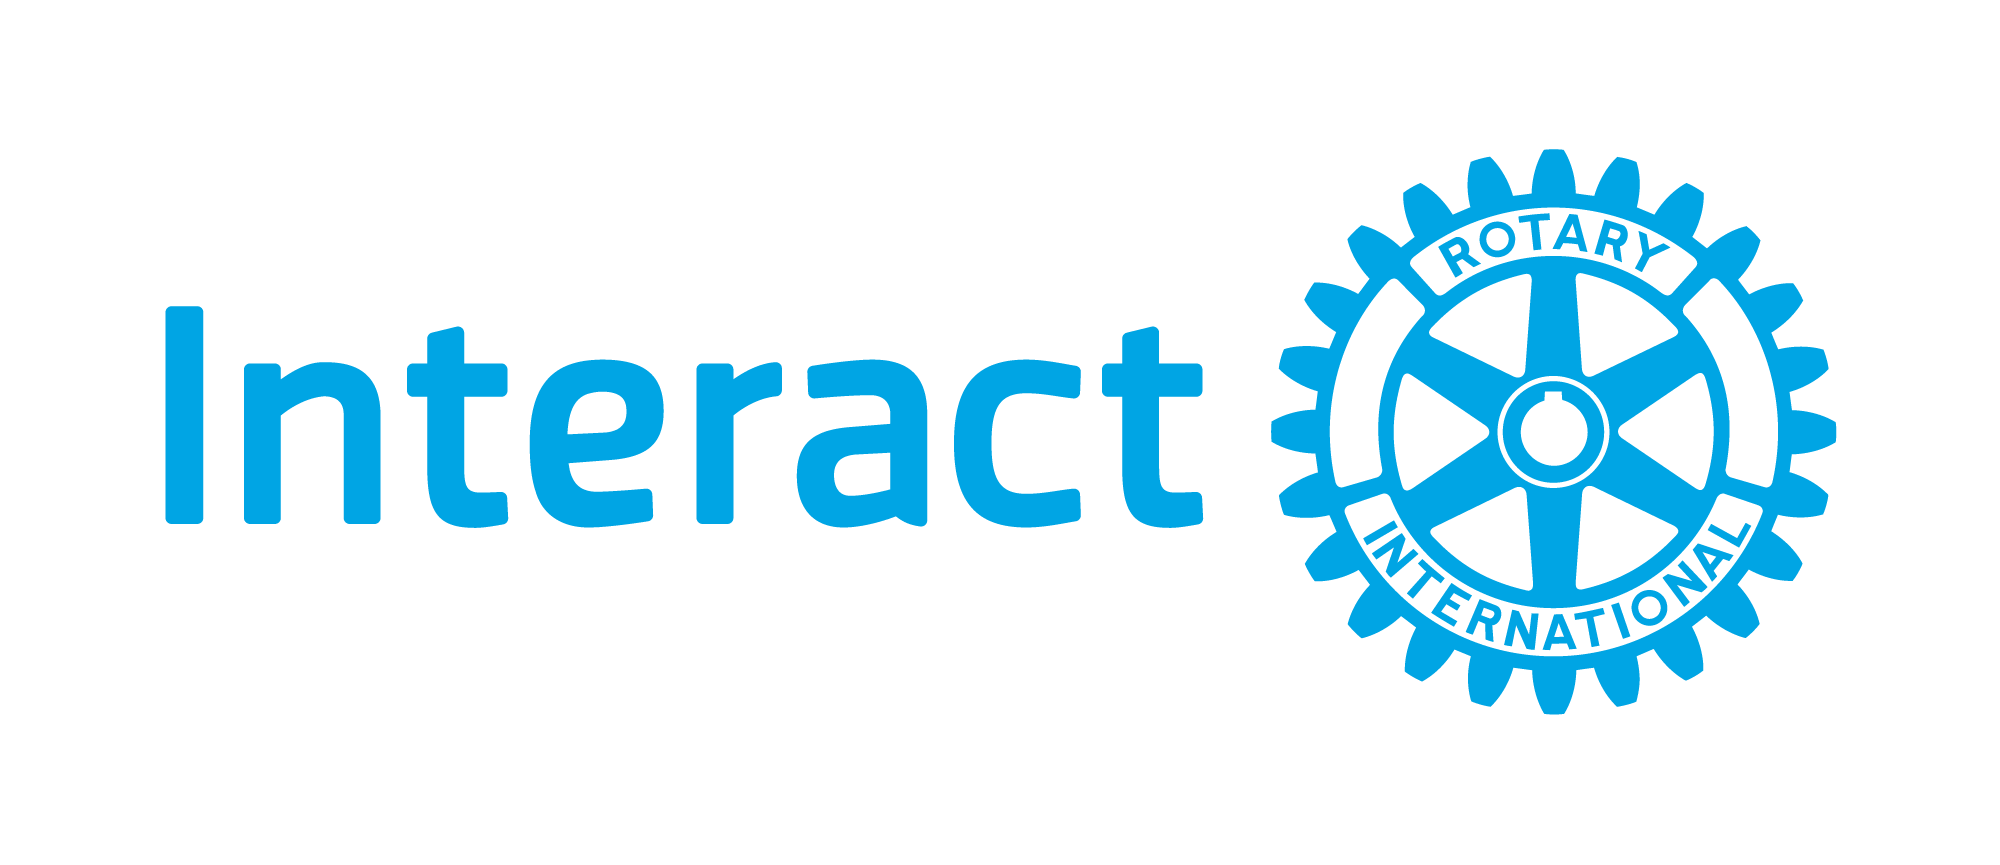 Interact Logo - Interact. Rotary Club of Marblehead